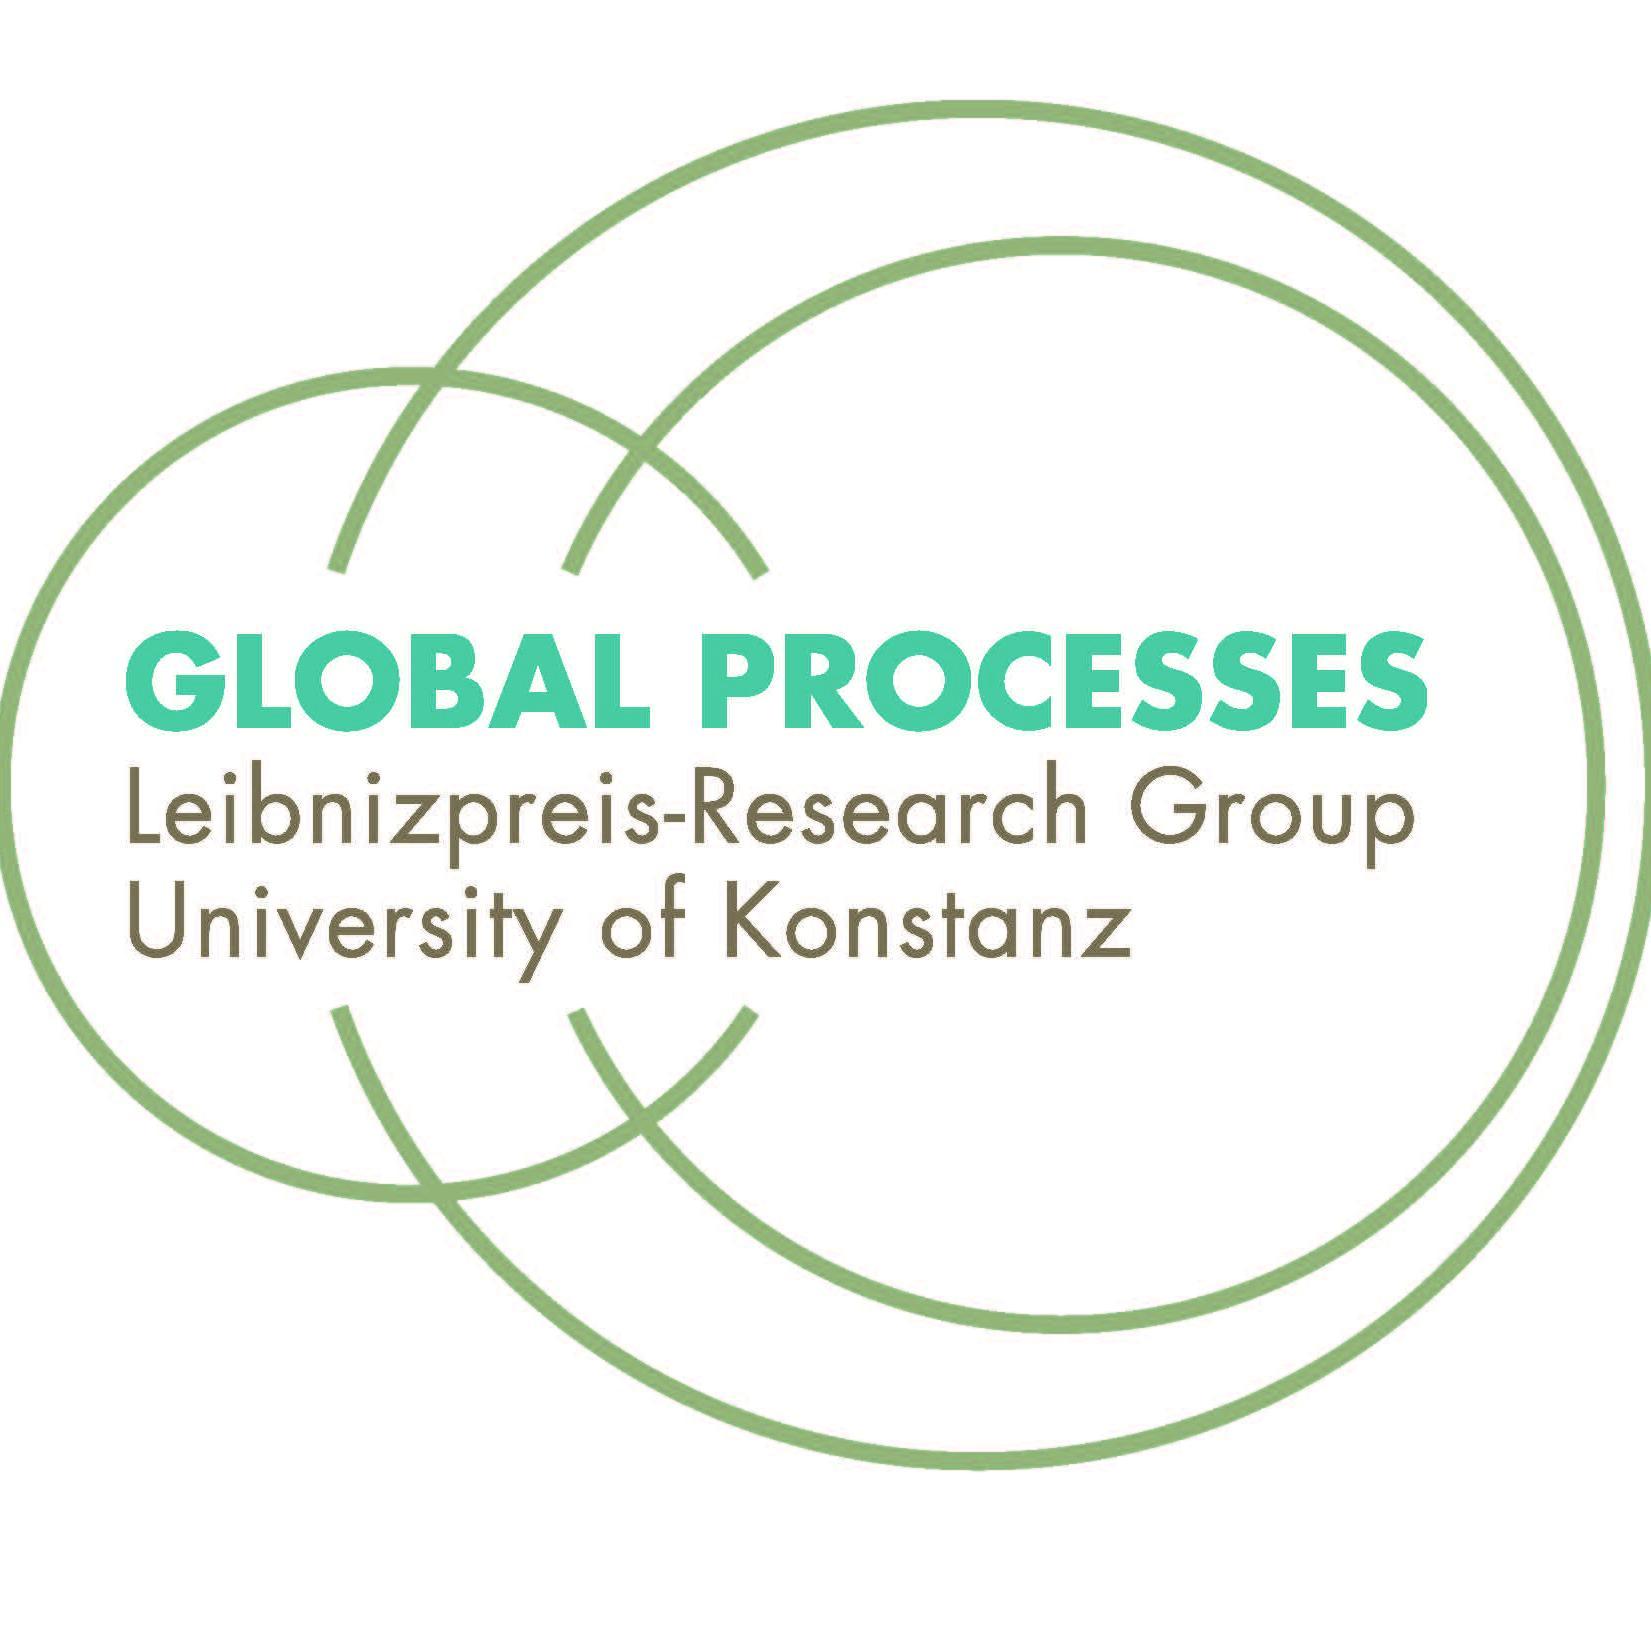 News on publications & activities of Prof. Jürgen Osterhammel's Research Group ‘Global Processes’.